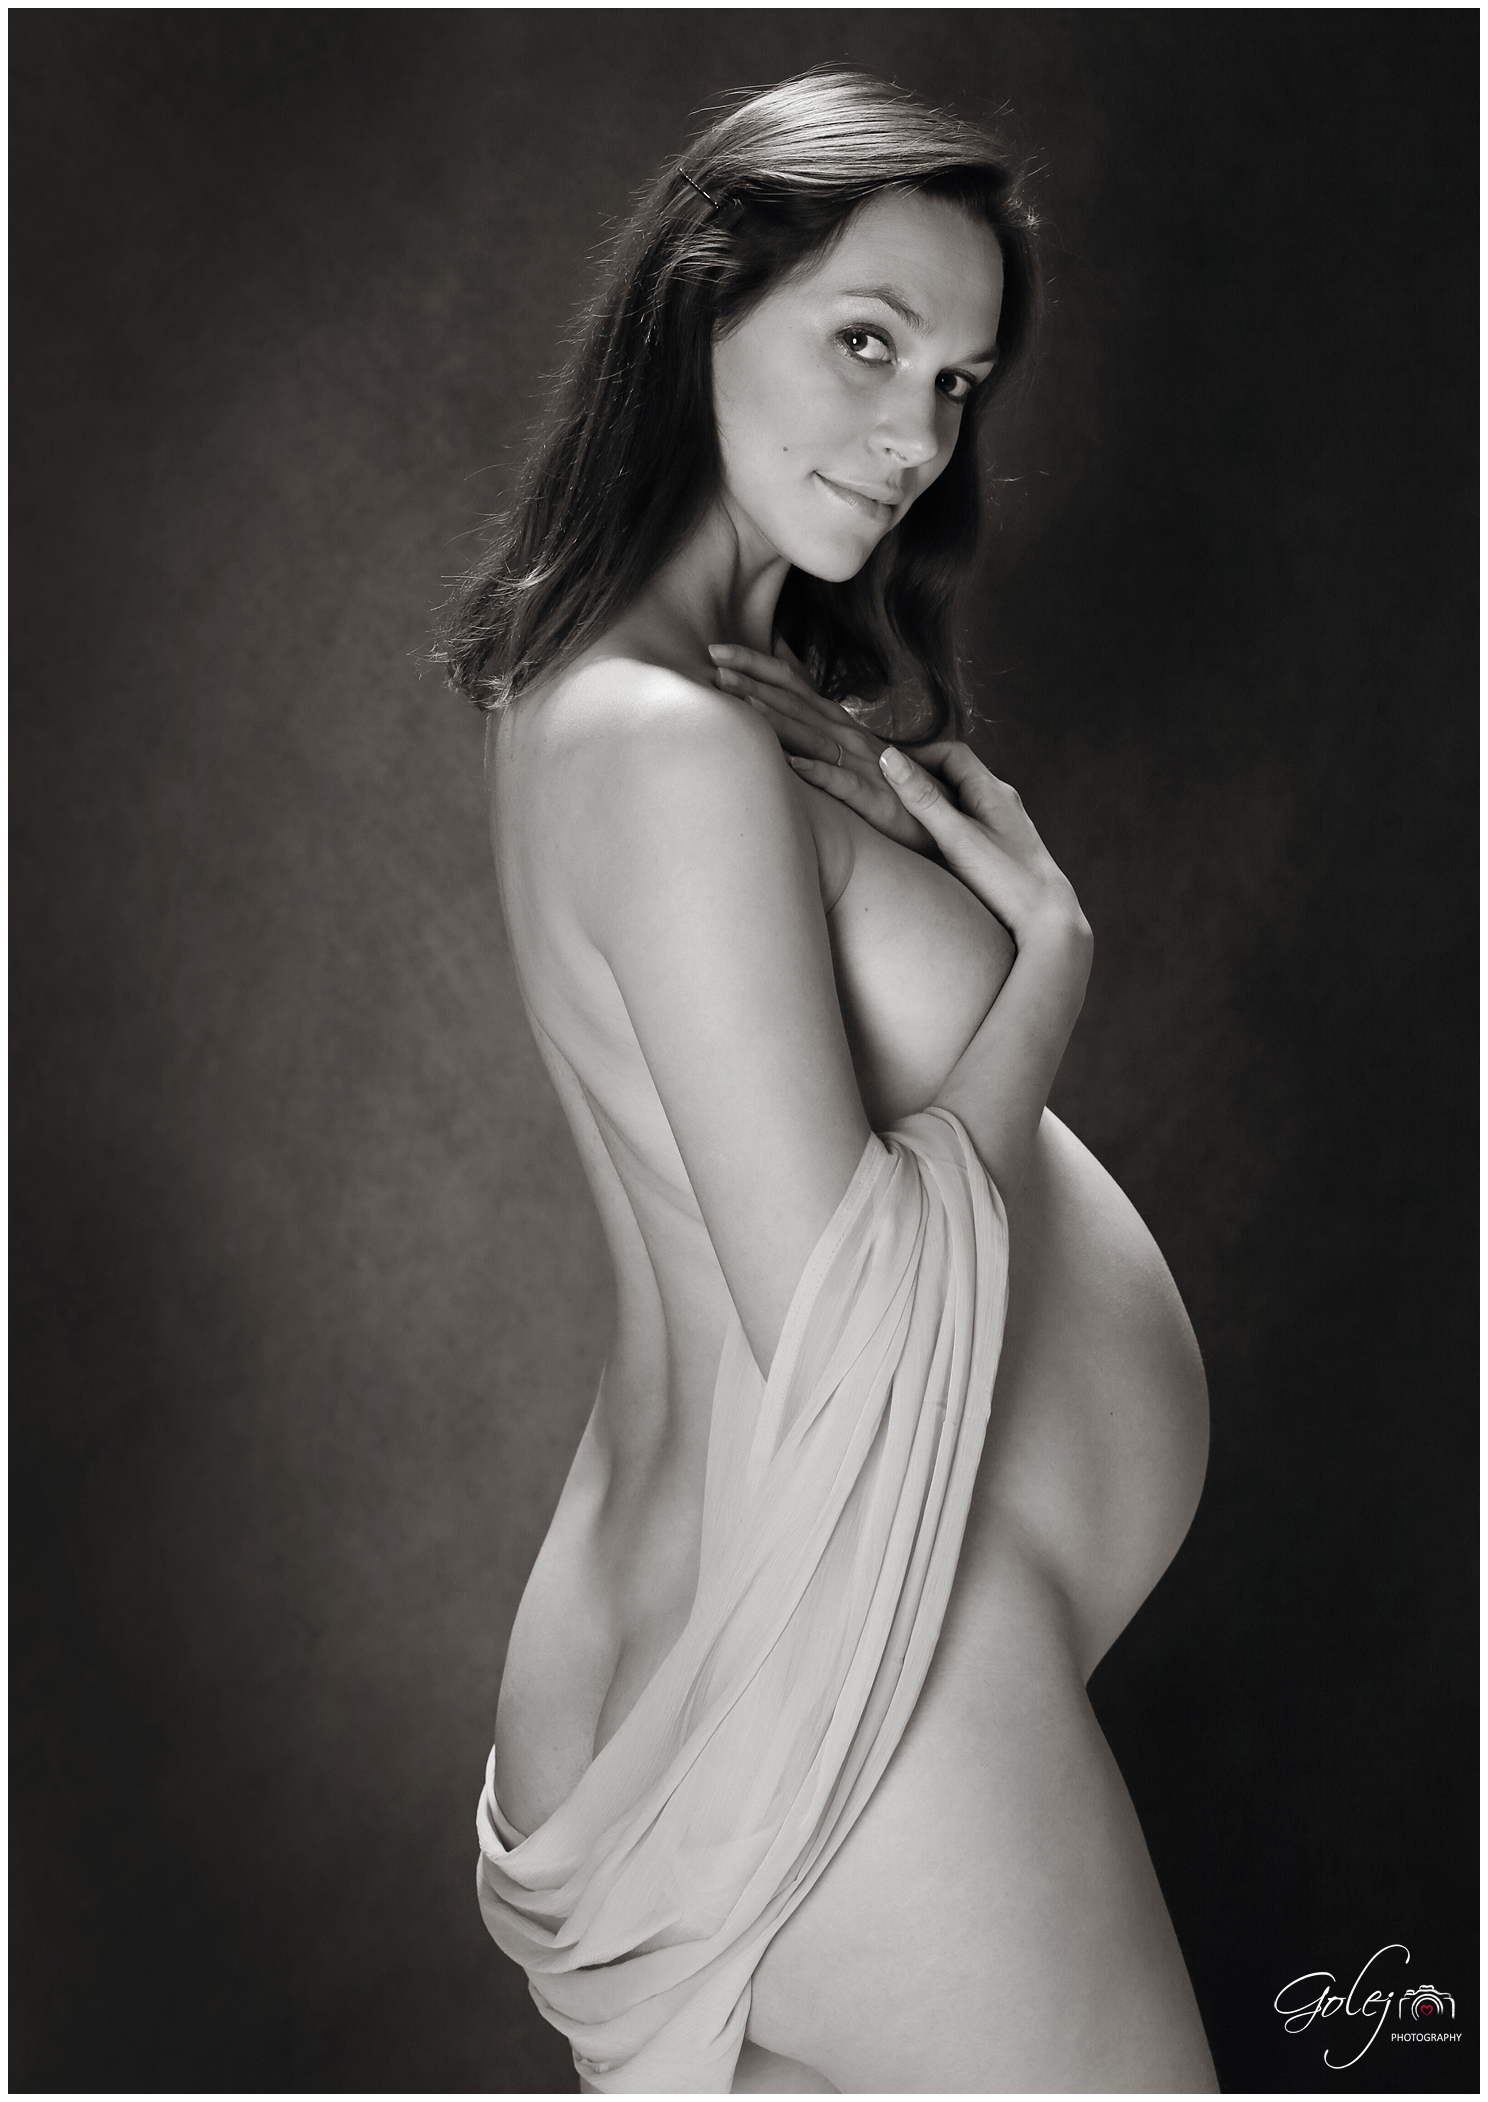 Umeleske tehotenske fotografie